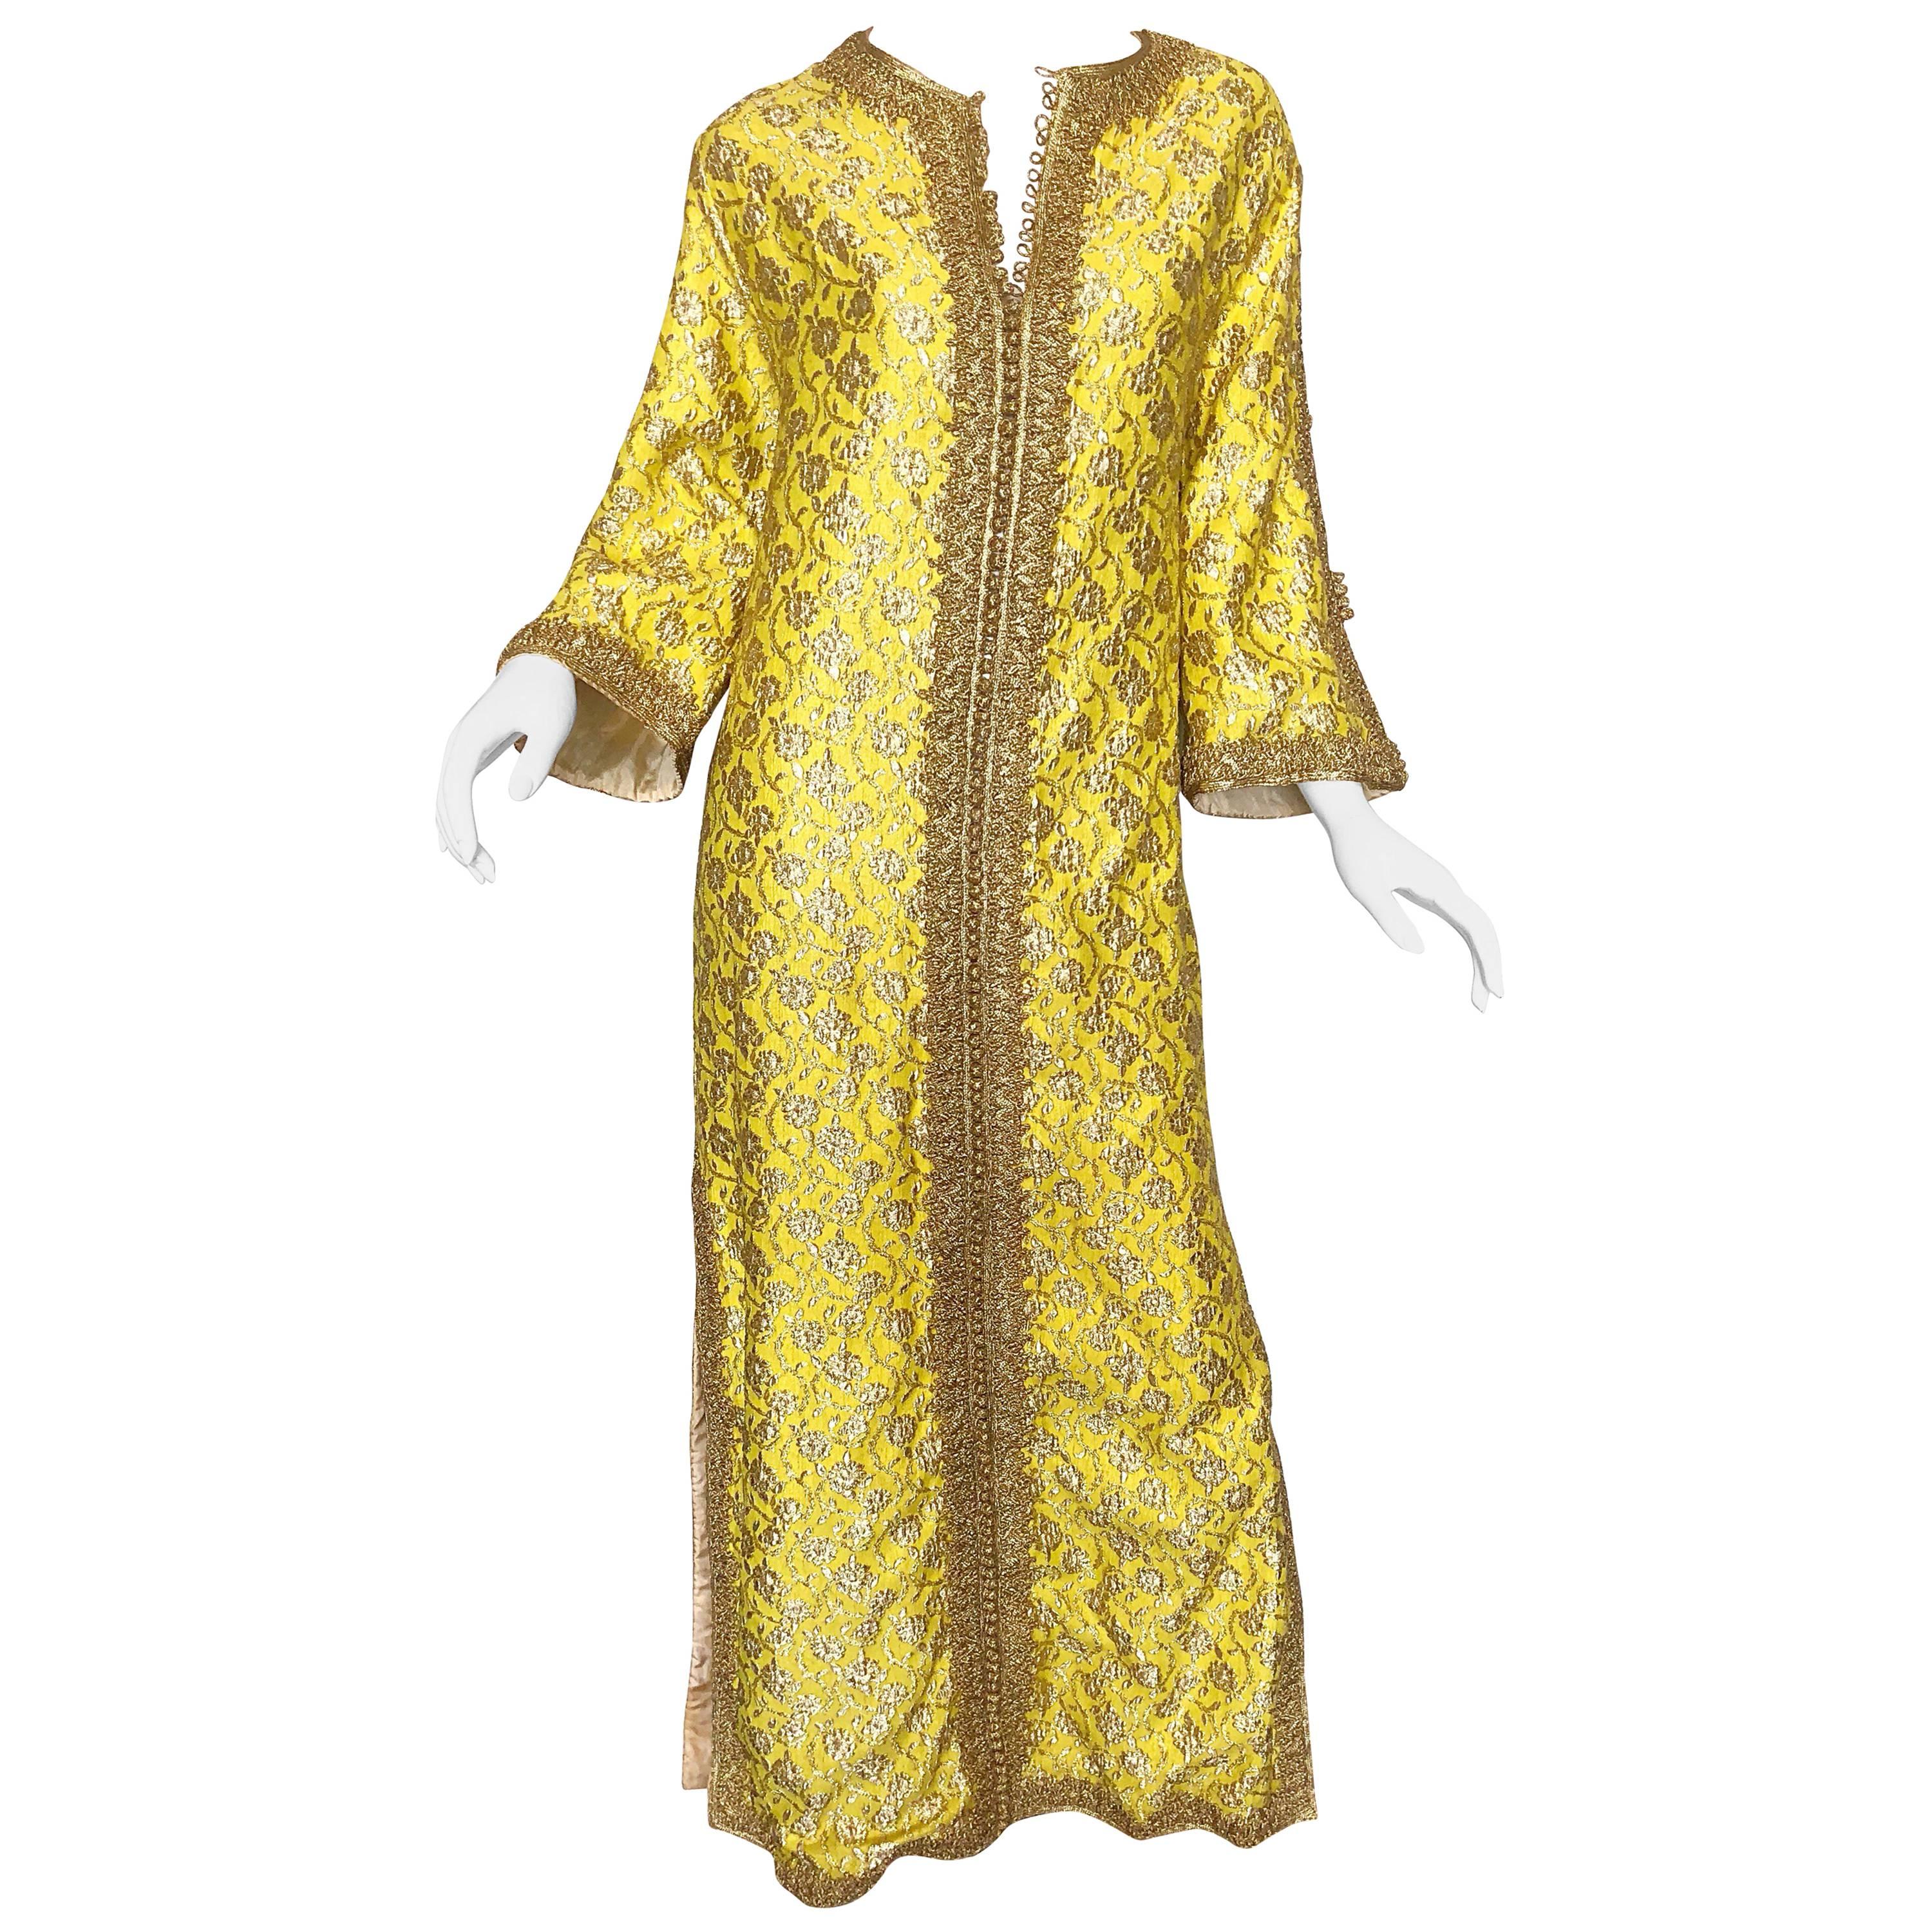 Amazing 1960s Moroccan Couture Silk Brocade Yellow + Gold Caftan 60s Maxi Dress